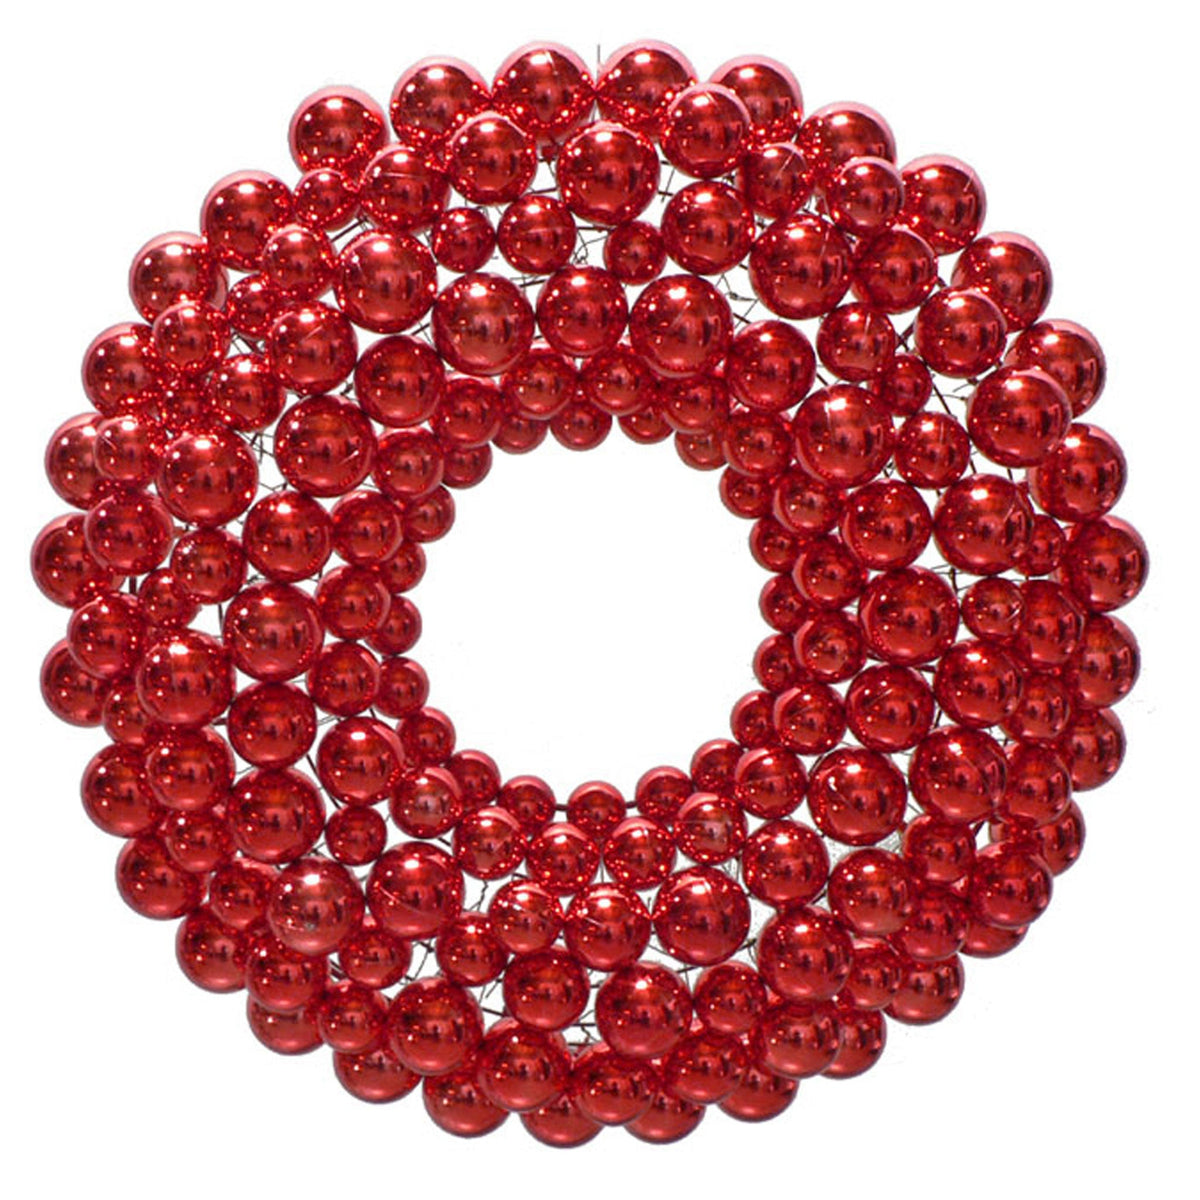 Red Ball Ornament Wreath